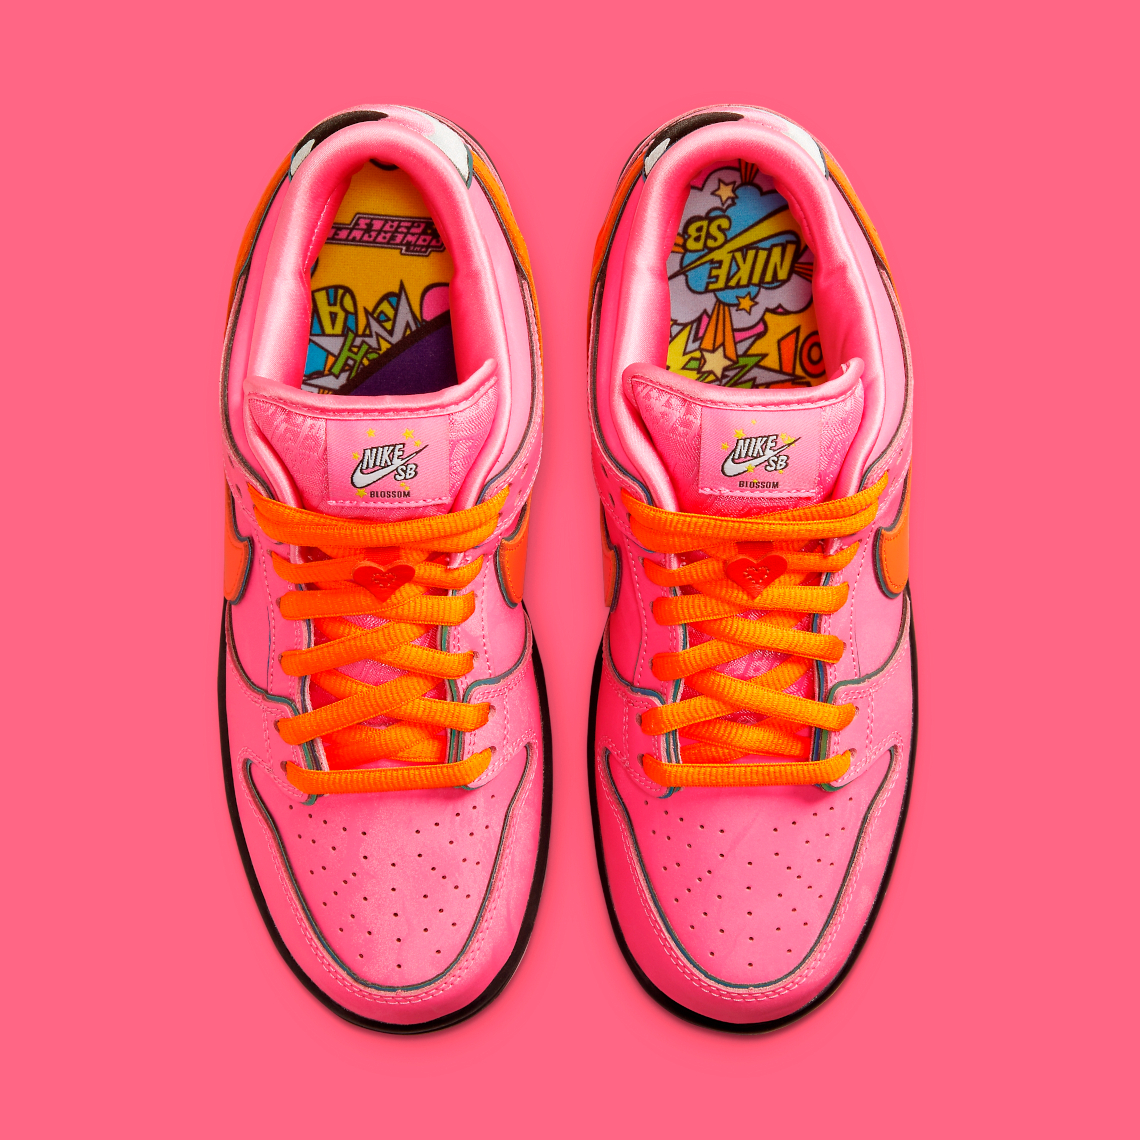 Where to Buy: Powerpuff Girls x Nike SB Dunks | Sneaker News